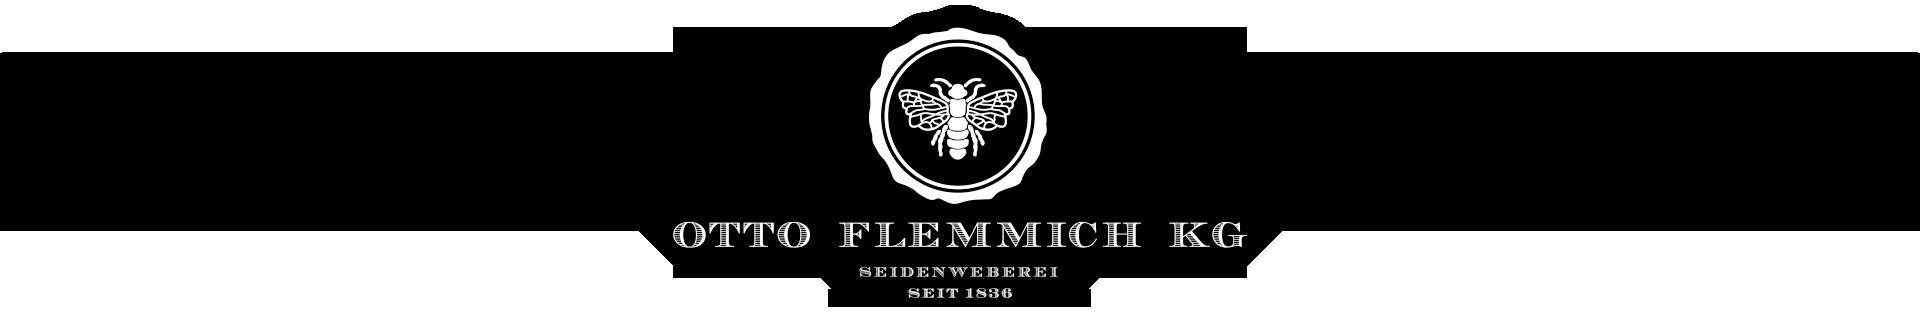 OTTO FLEMMICH KG Logo